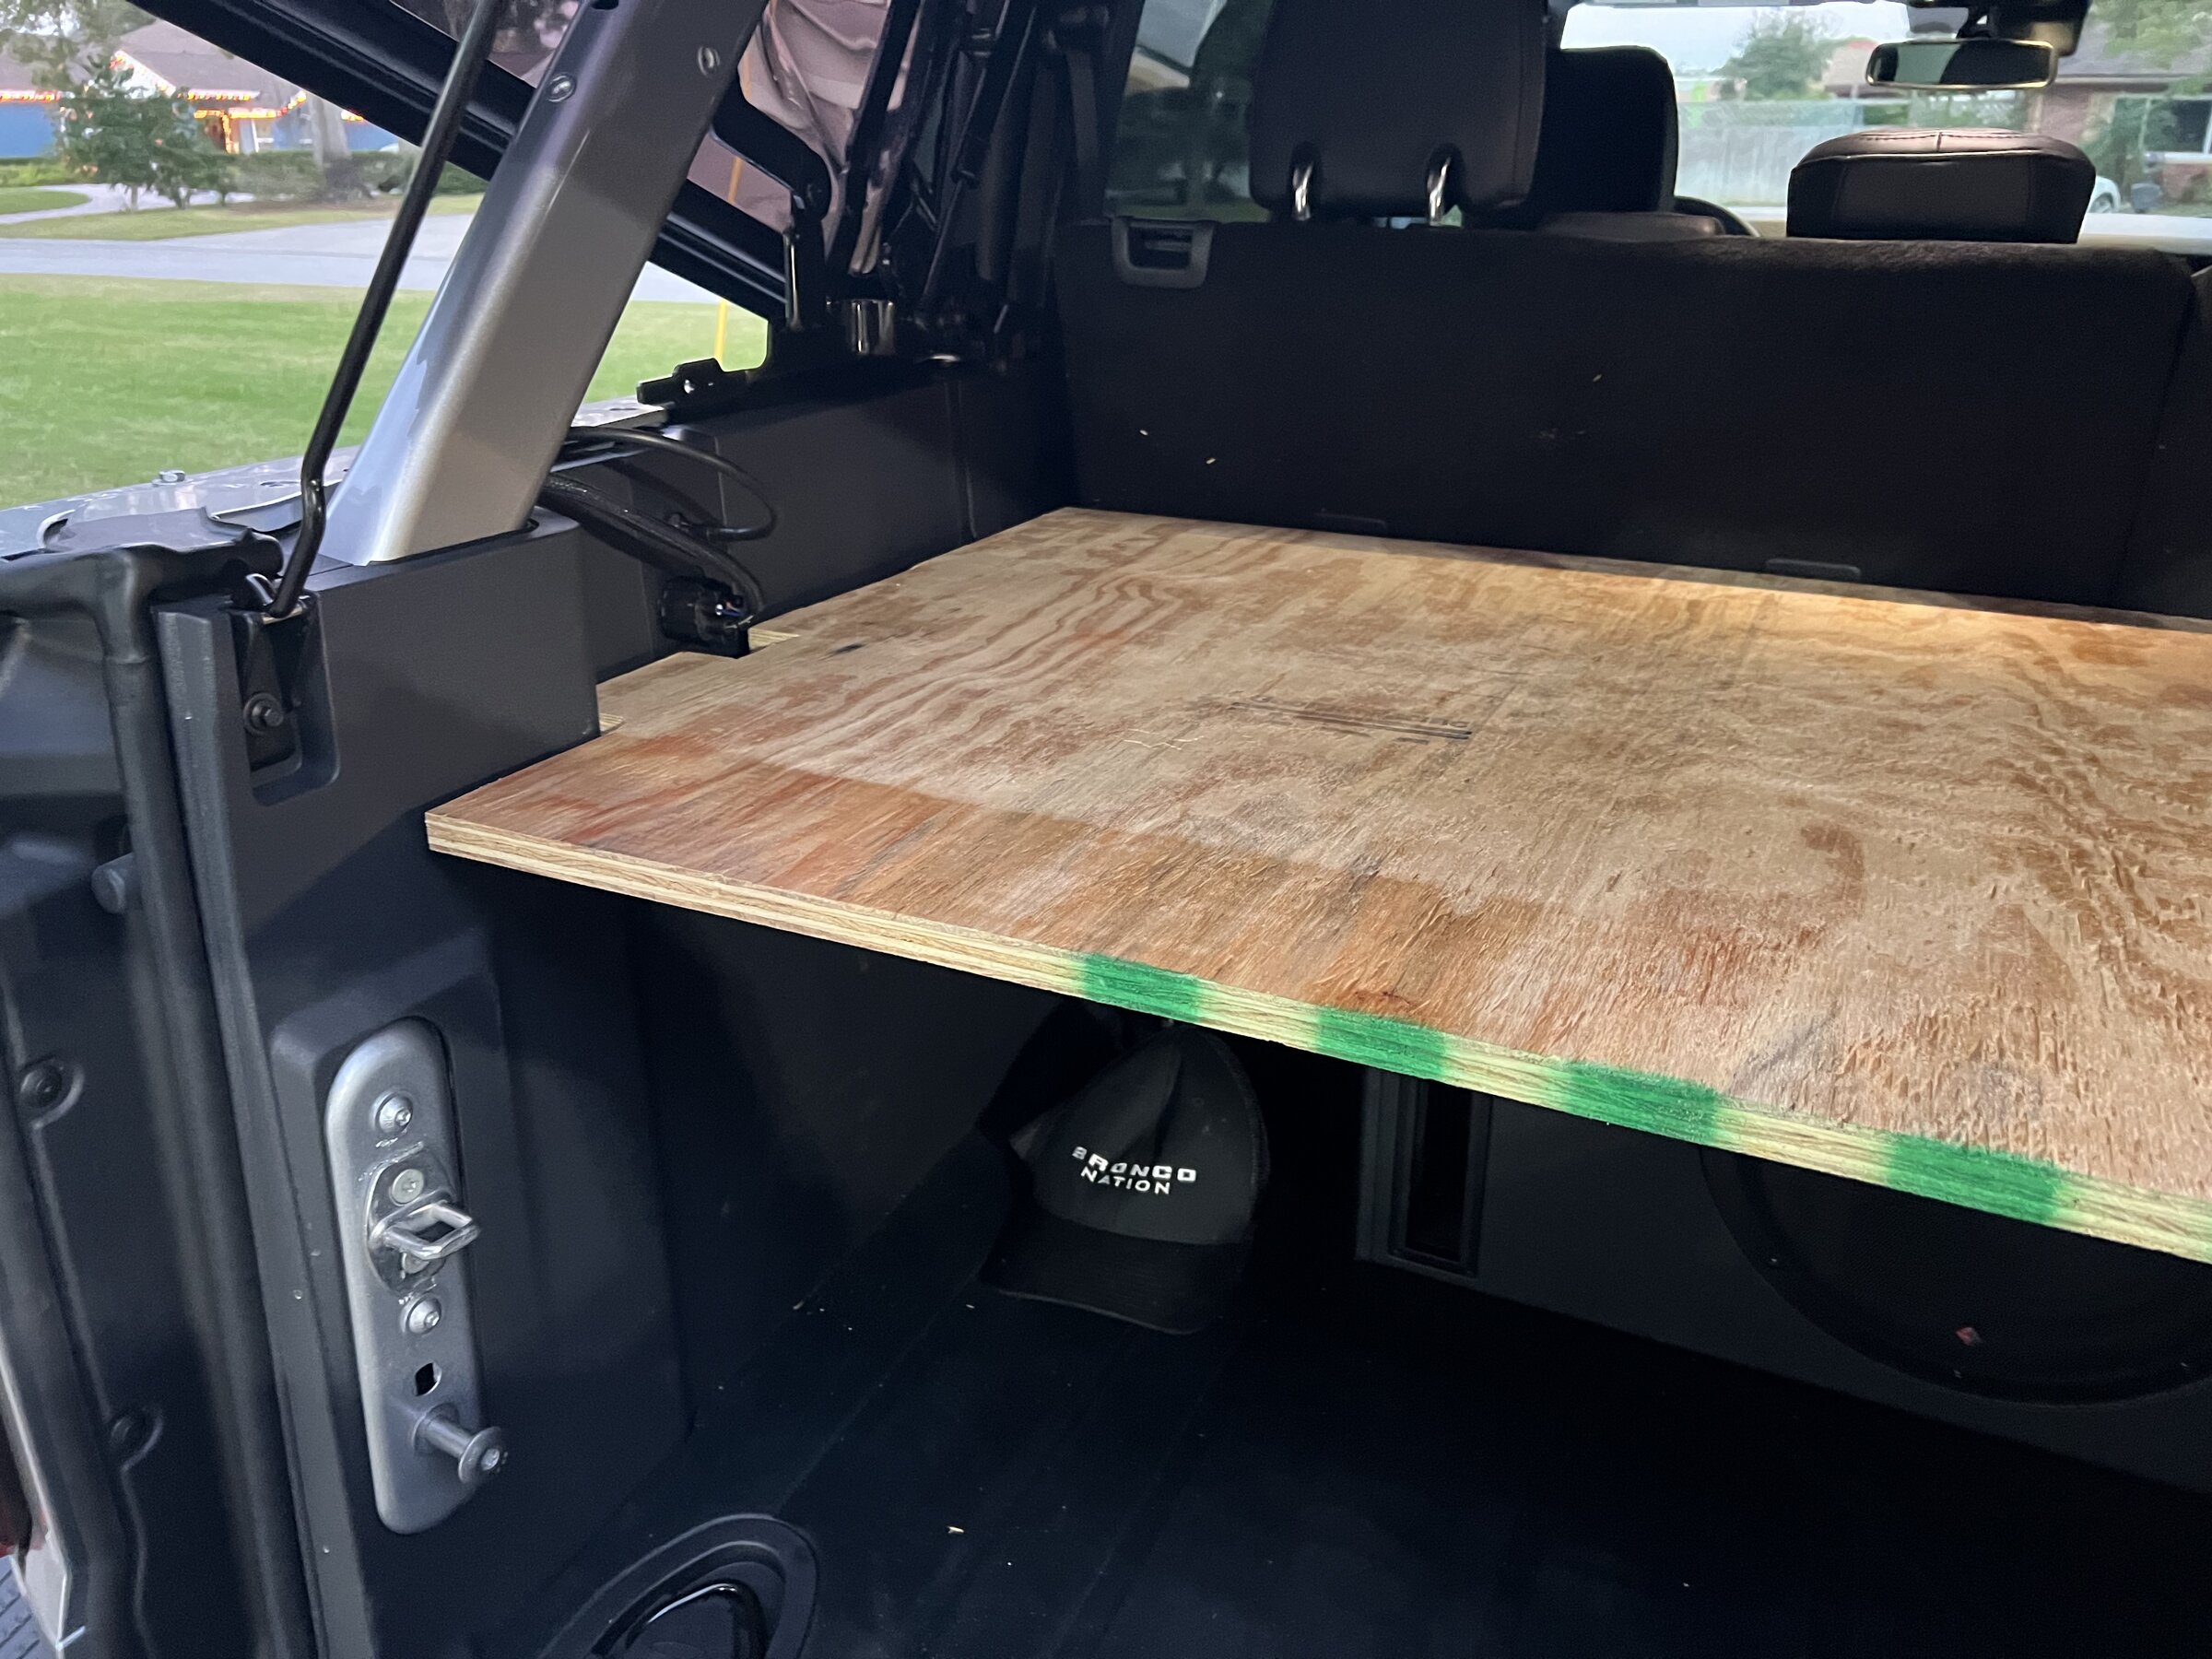 Ford Bronco [DIY] $28 trunk storage shelf for 4 door Broncos. No cutting required. 3B80CA82-481B-4E40-A9E9-00C66C7AF1B0